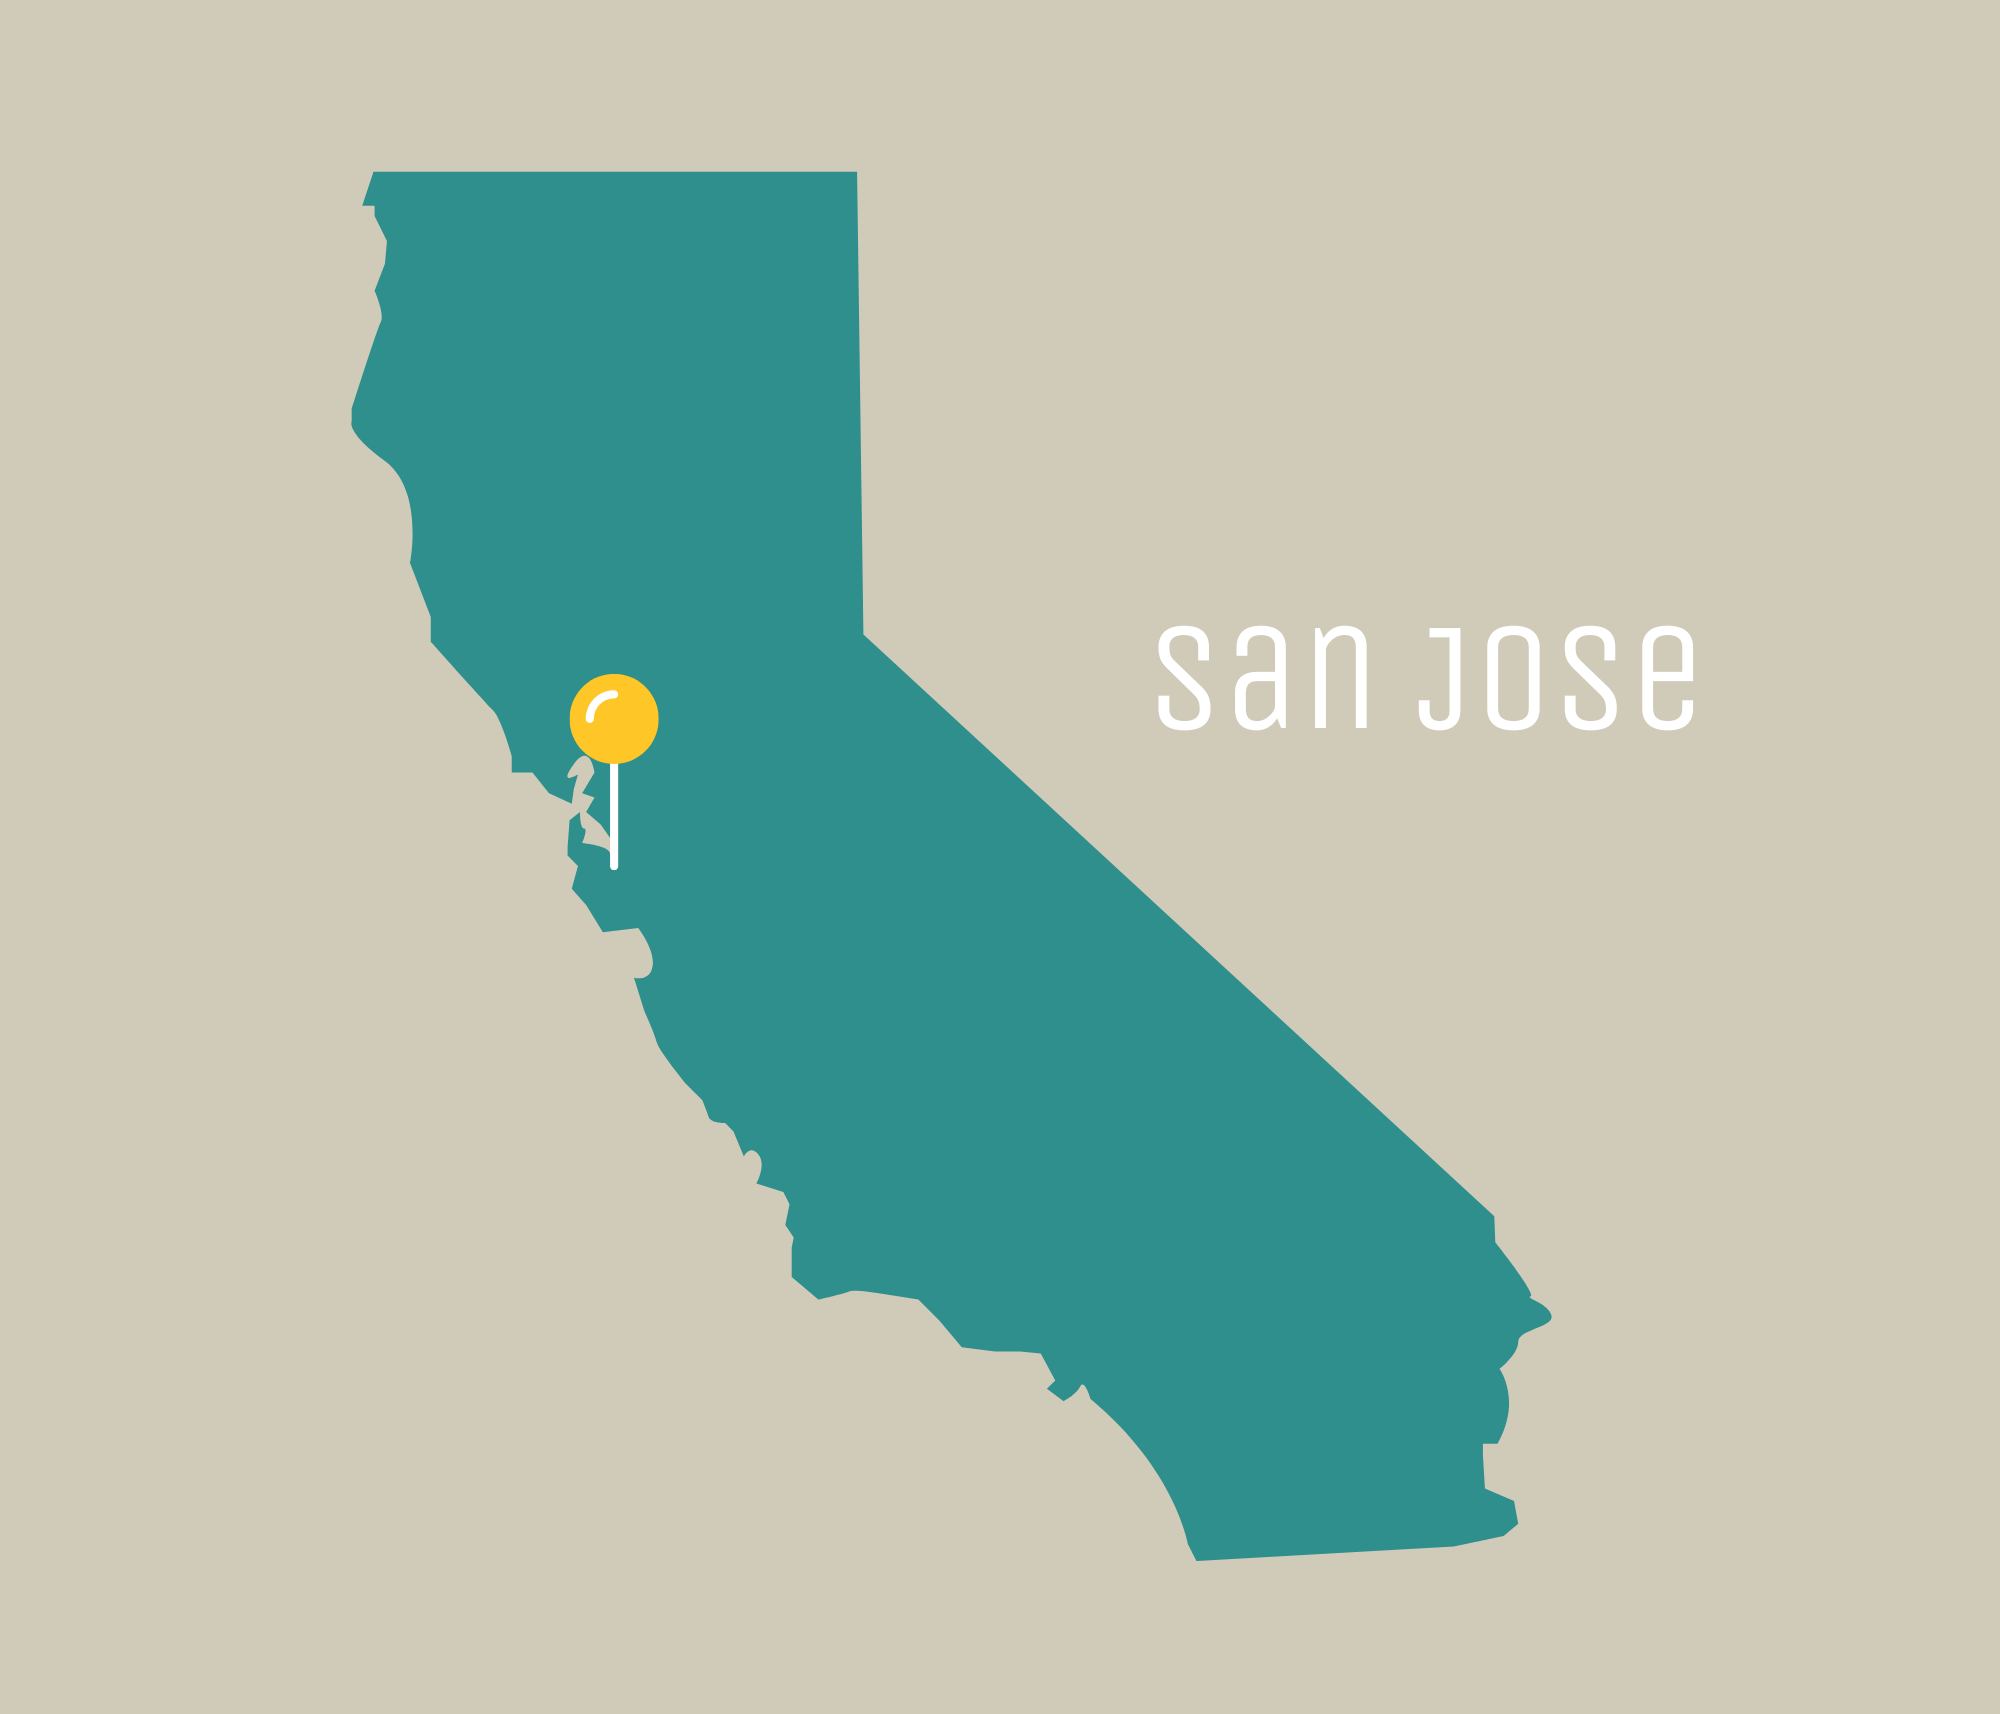 Yellow pin in the State of California where San Jose is